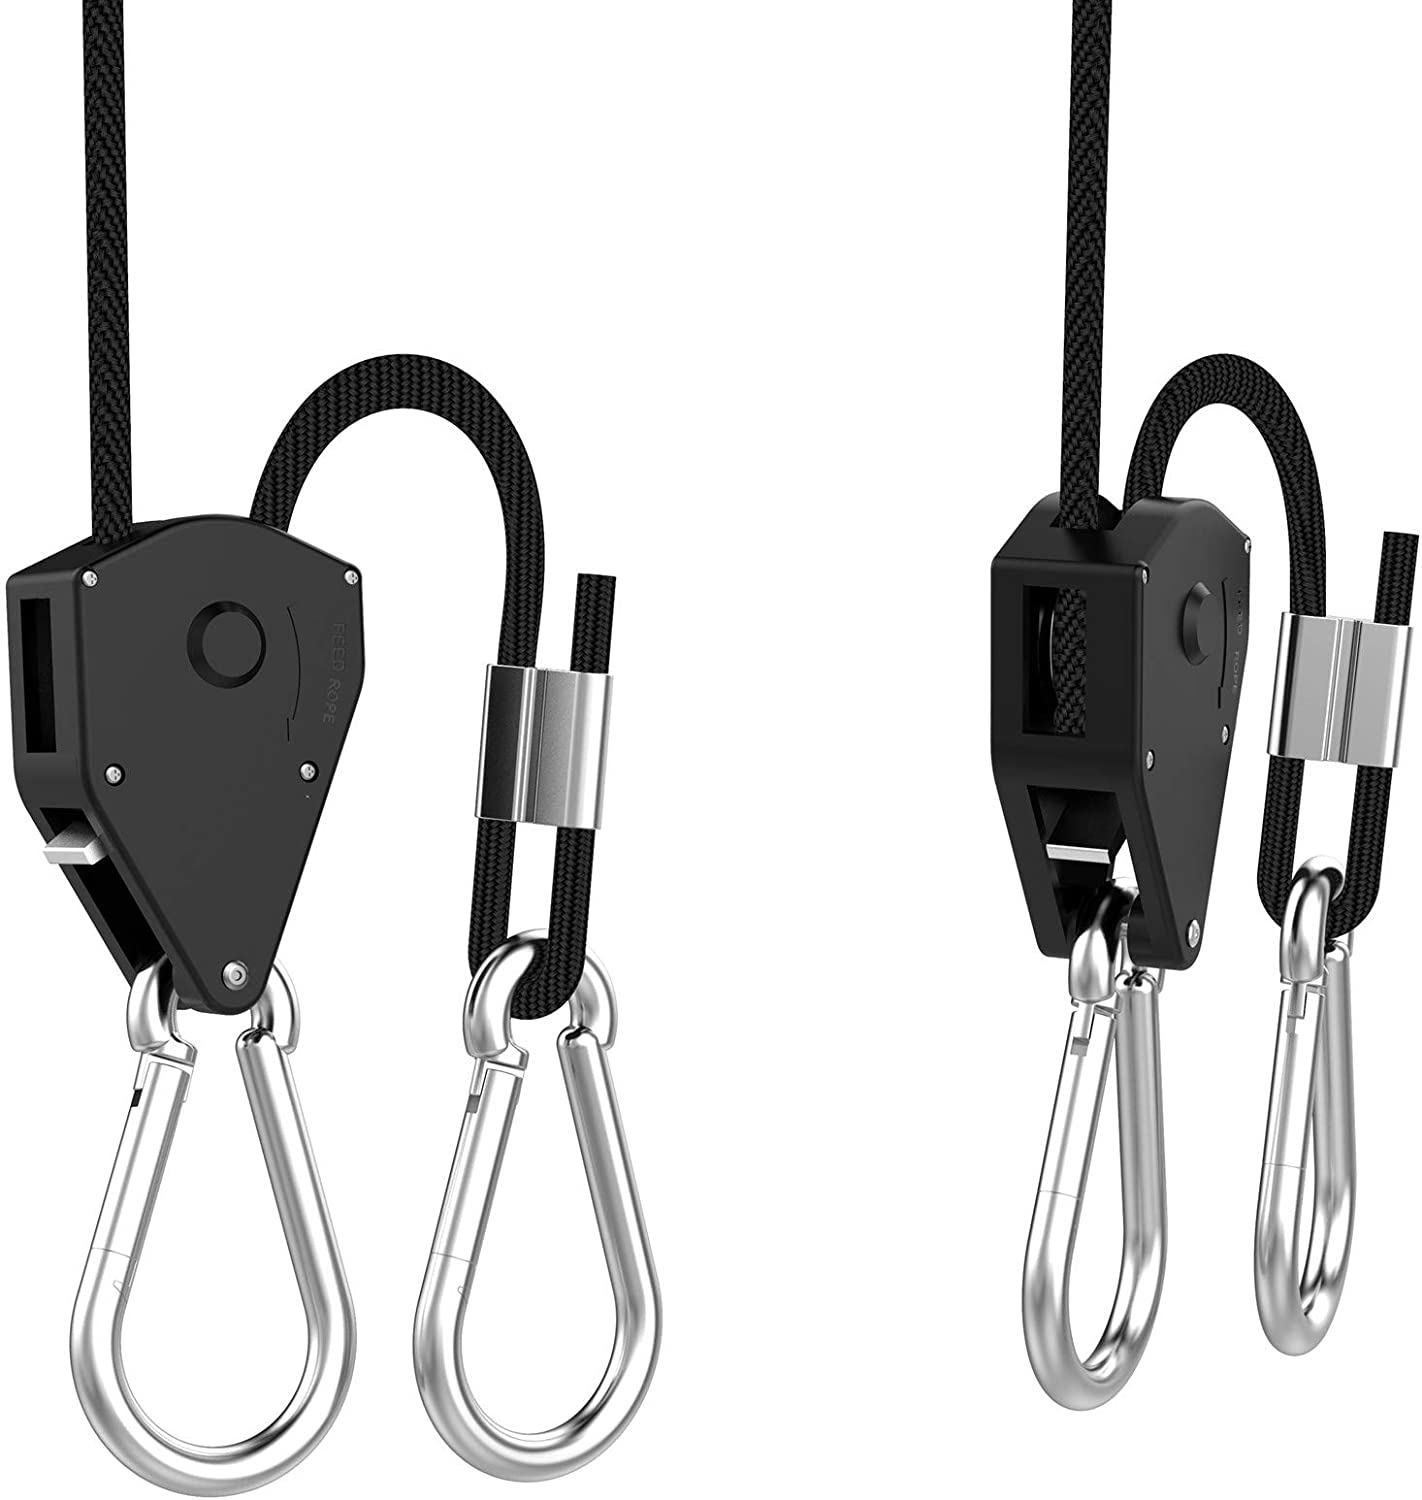 1 Pair 1/8 inch Adjustable Heavy Duty Rope Hanger - Reinforced Metal Internal Gears Ratchets foe Growing Light Fixtures, Loose-Proof Design, 8-ft Long & 150lbs Weight Capacity